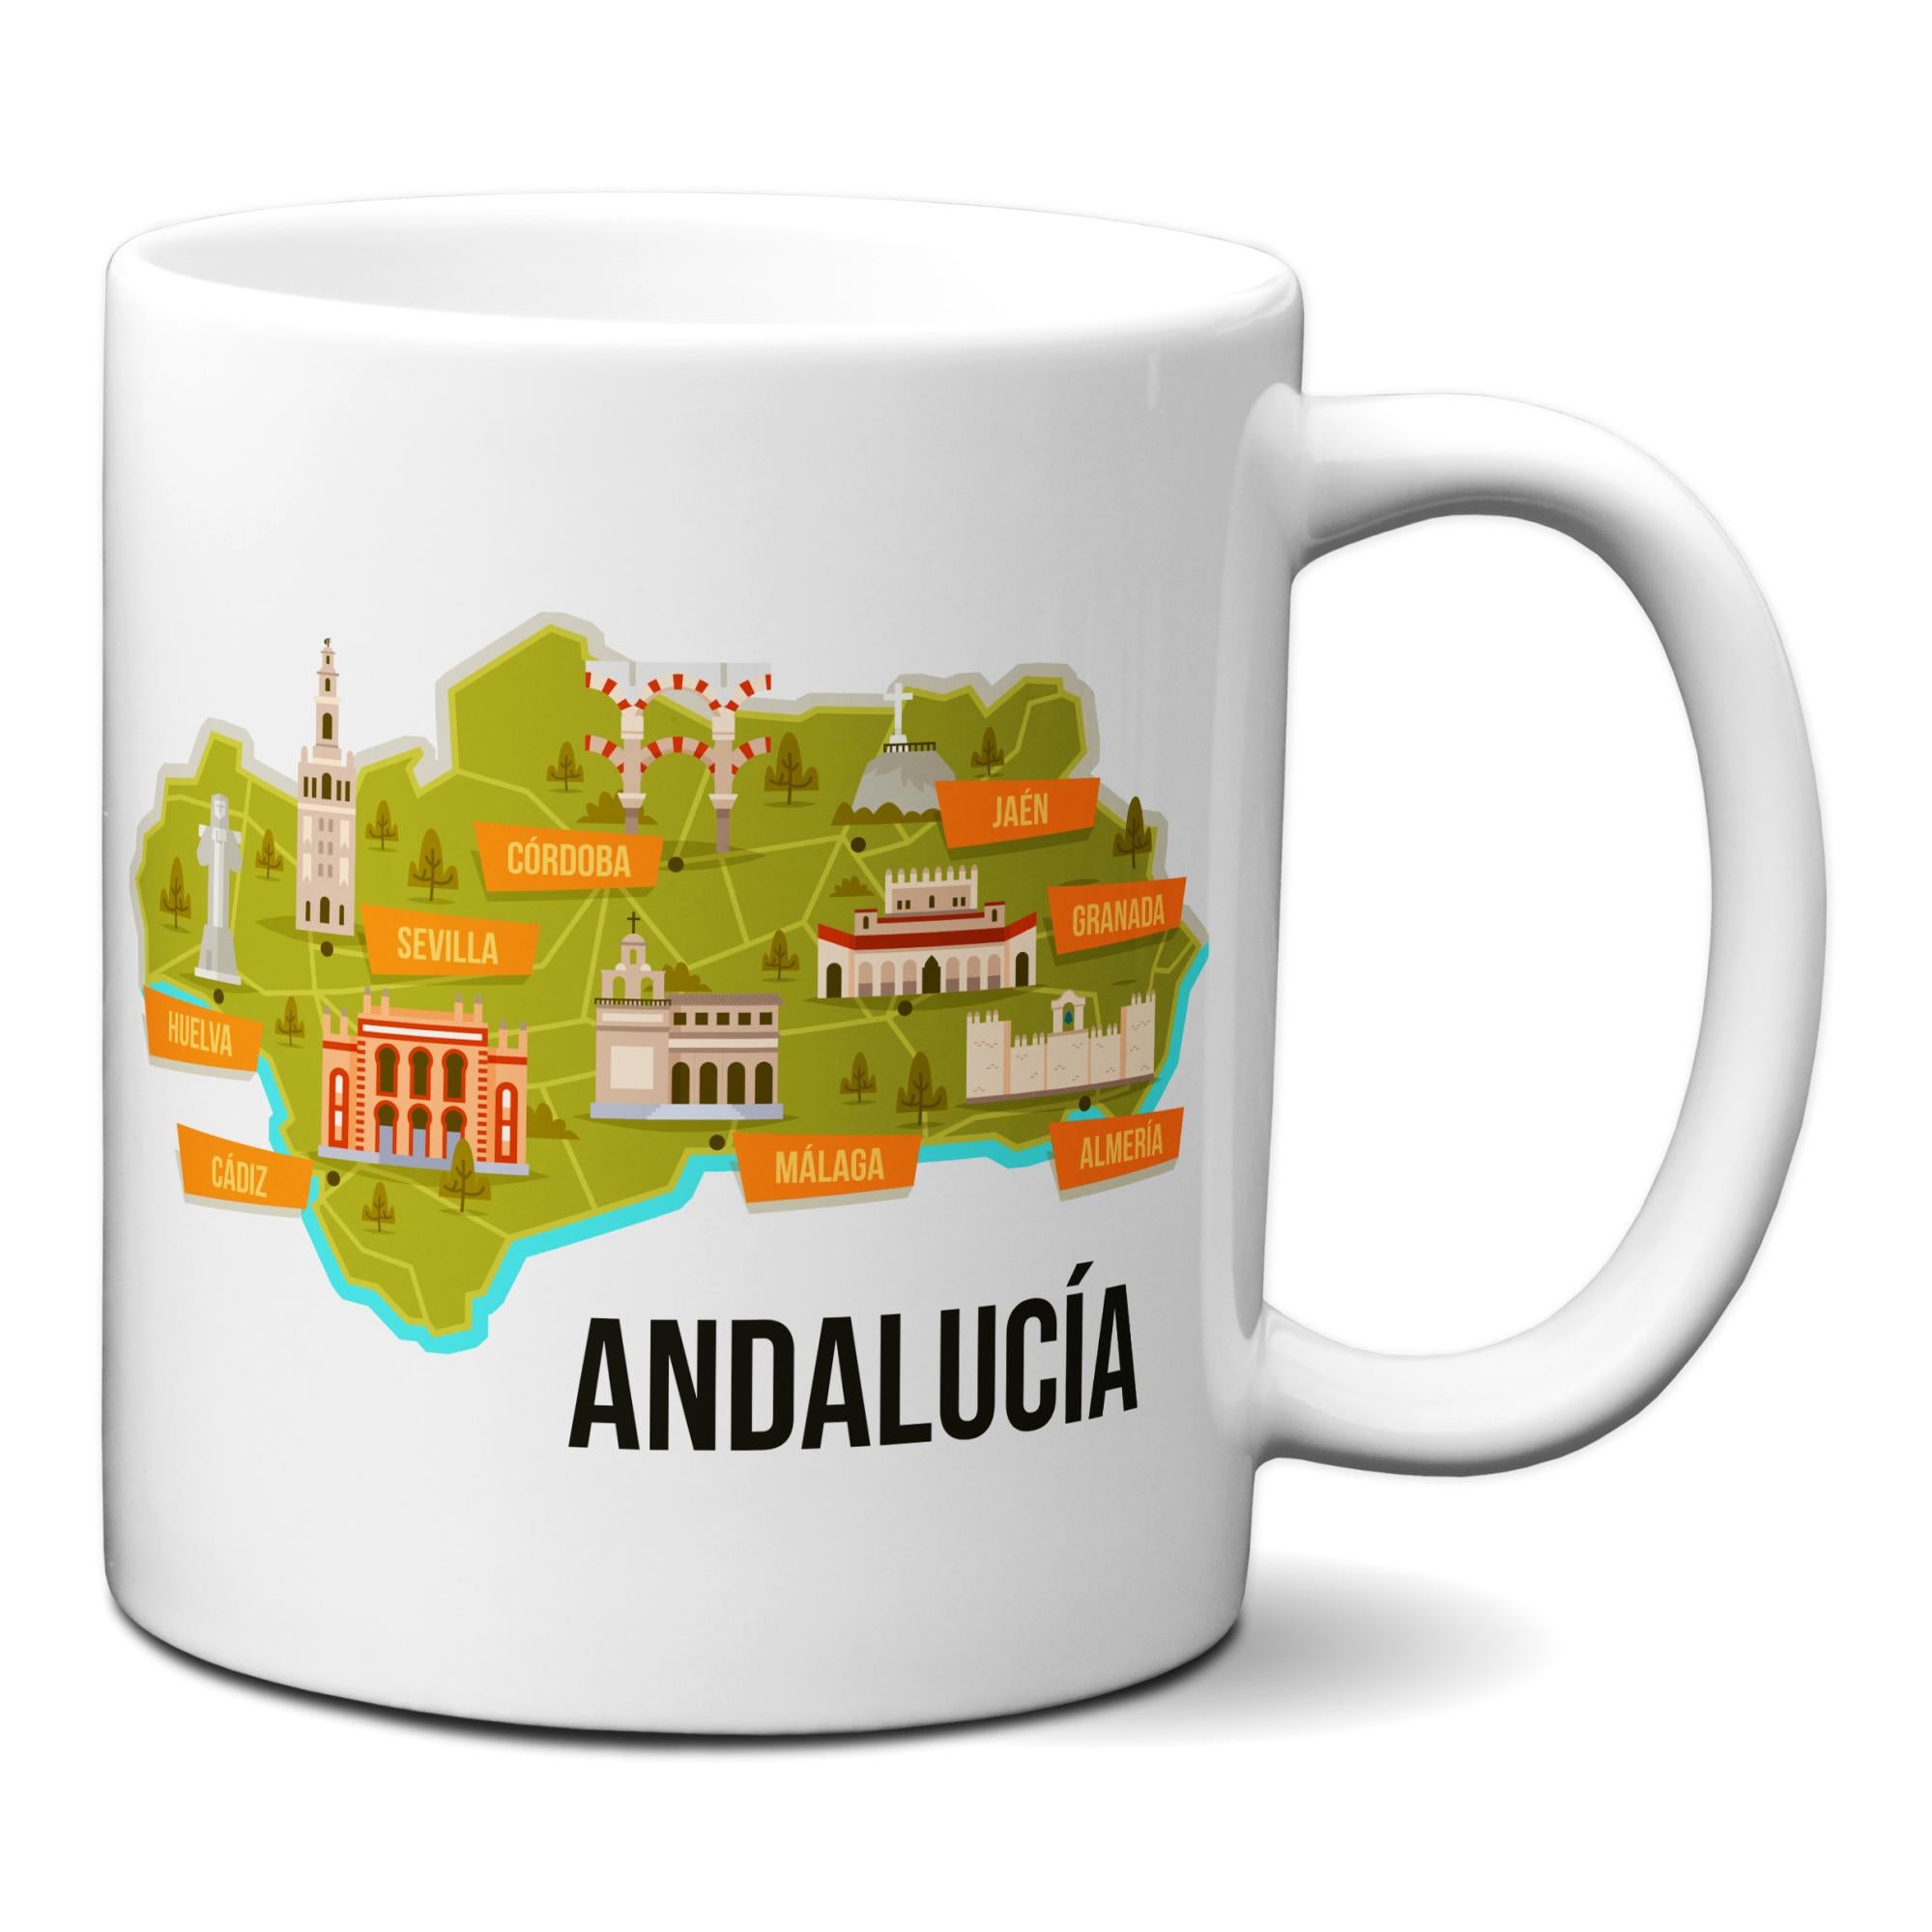 TBOC Taza Desayuno Porcelana, Regalos Originales [Giralda] Mug Souvenirs  Sevilla Andalucia España